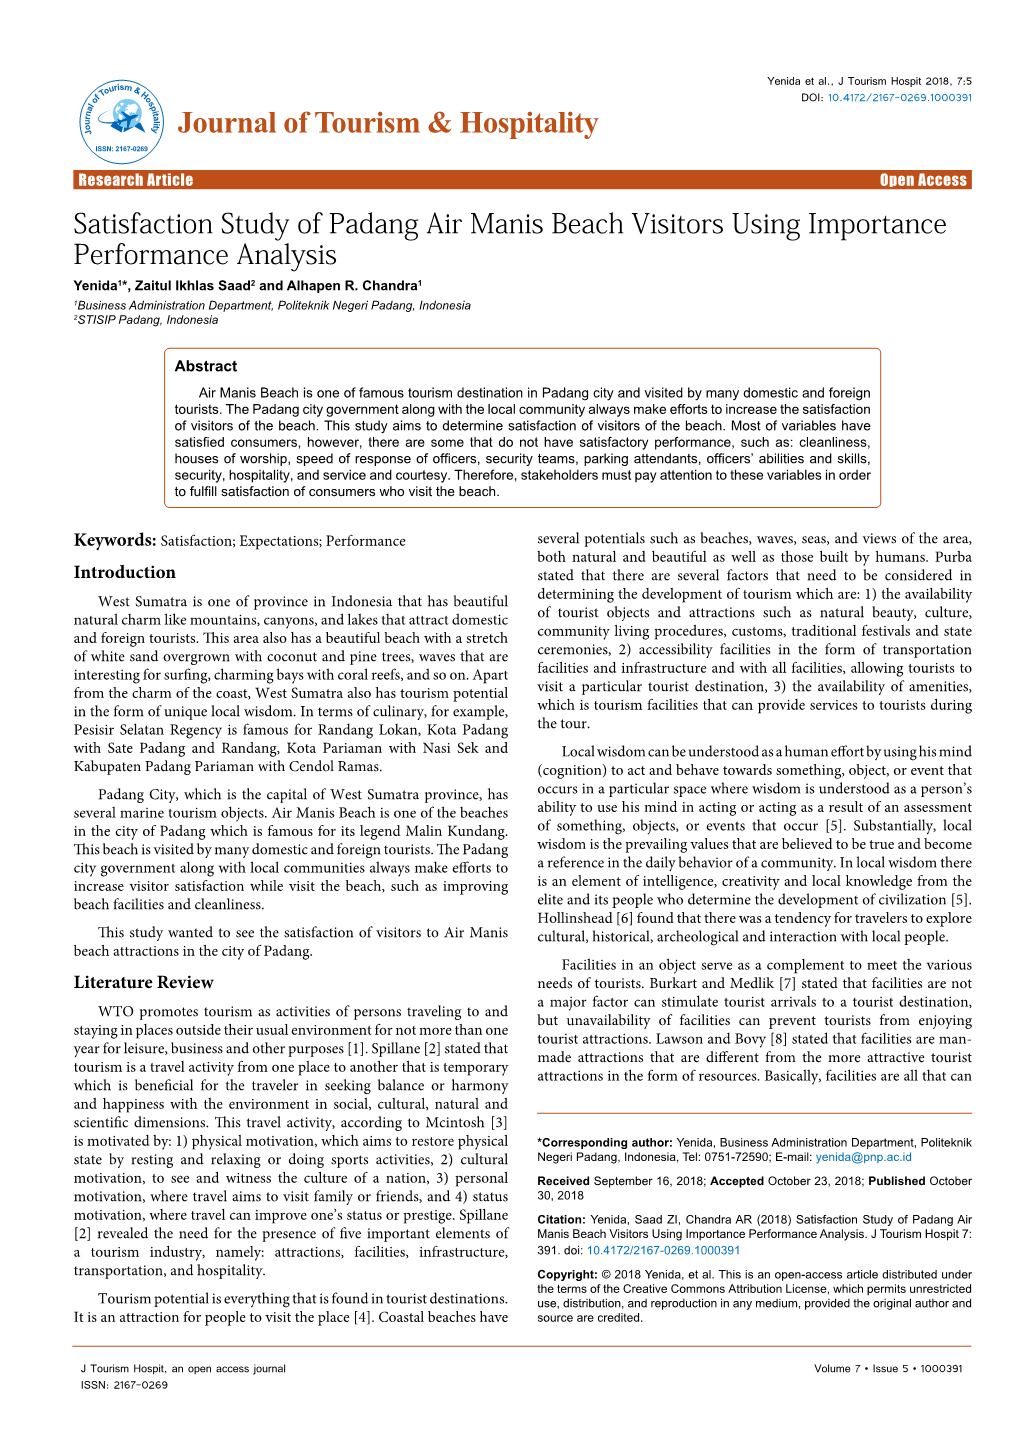 Satisfaction Study of Padang Air Manis Beach Visitors Using Importance Performance Analysis Yenida1*, Zaitul Ikhlas Saad2 and Alhapen R